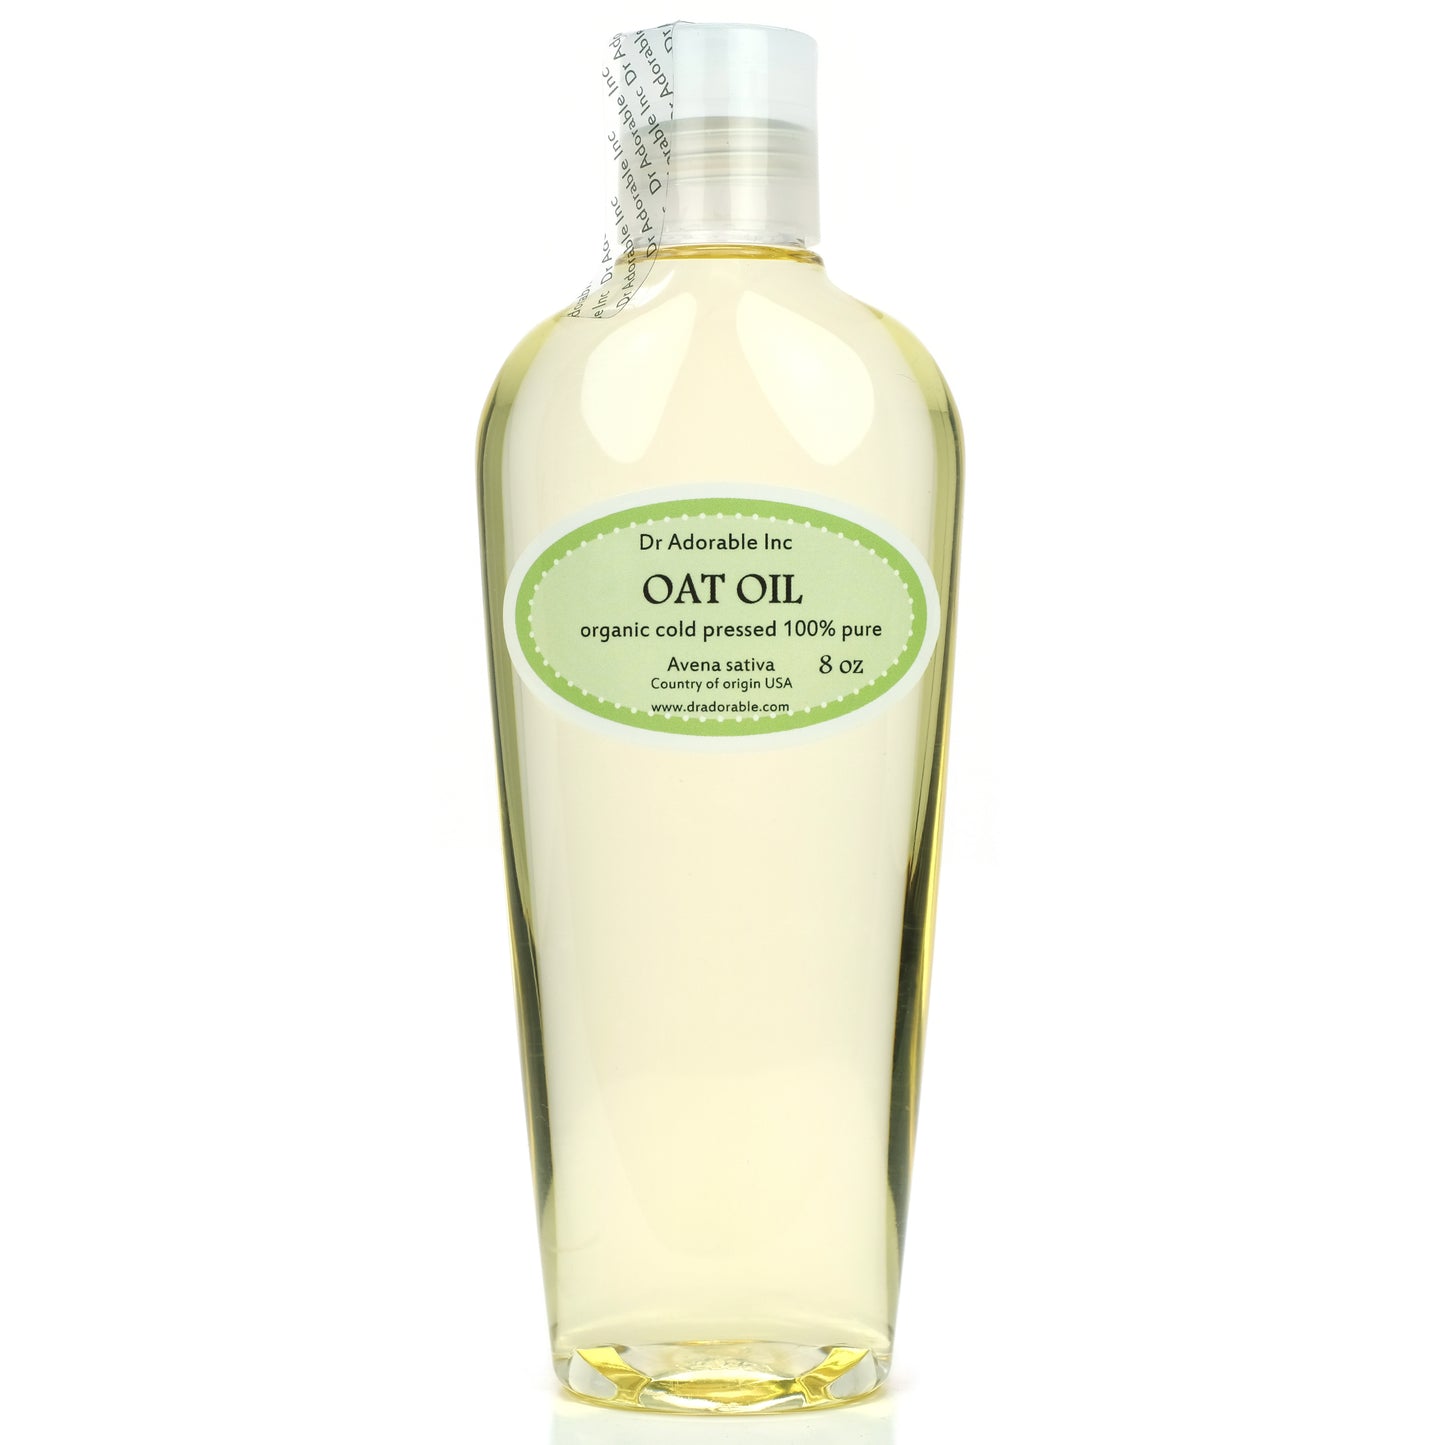 Oat Oil - 100% Pure Natural Premium Organic Cold Pressed